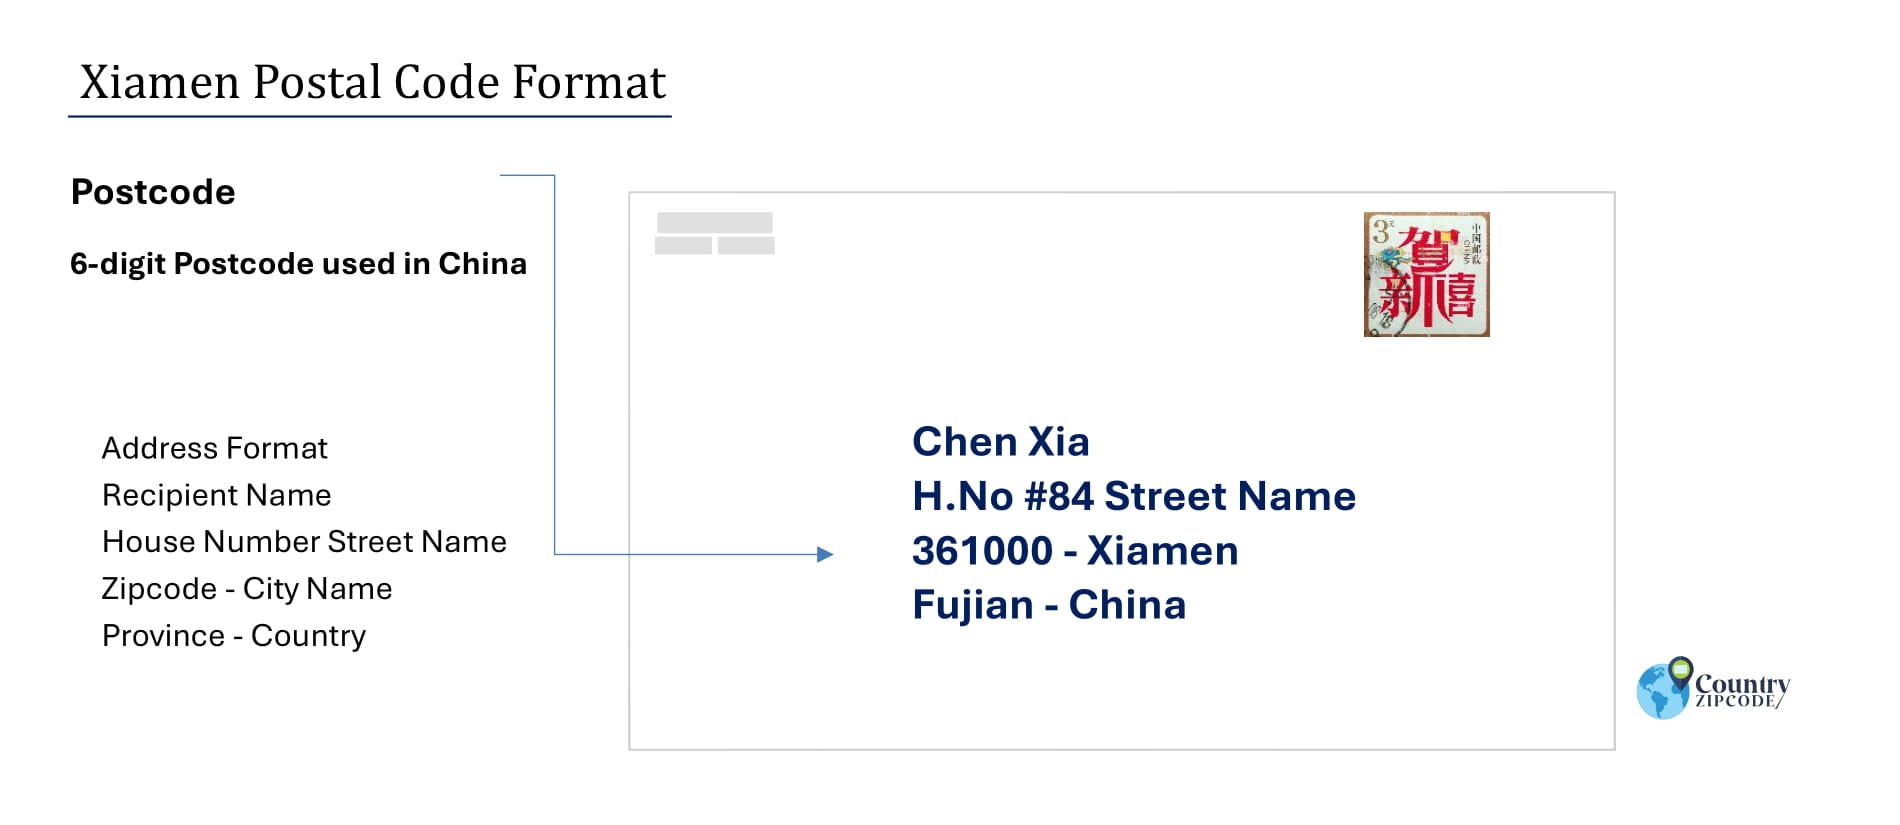 Example of XiamenChinaPostalcodeandAddressformat